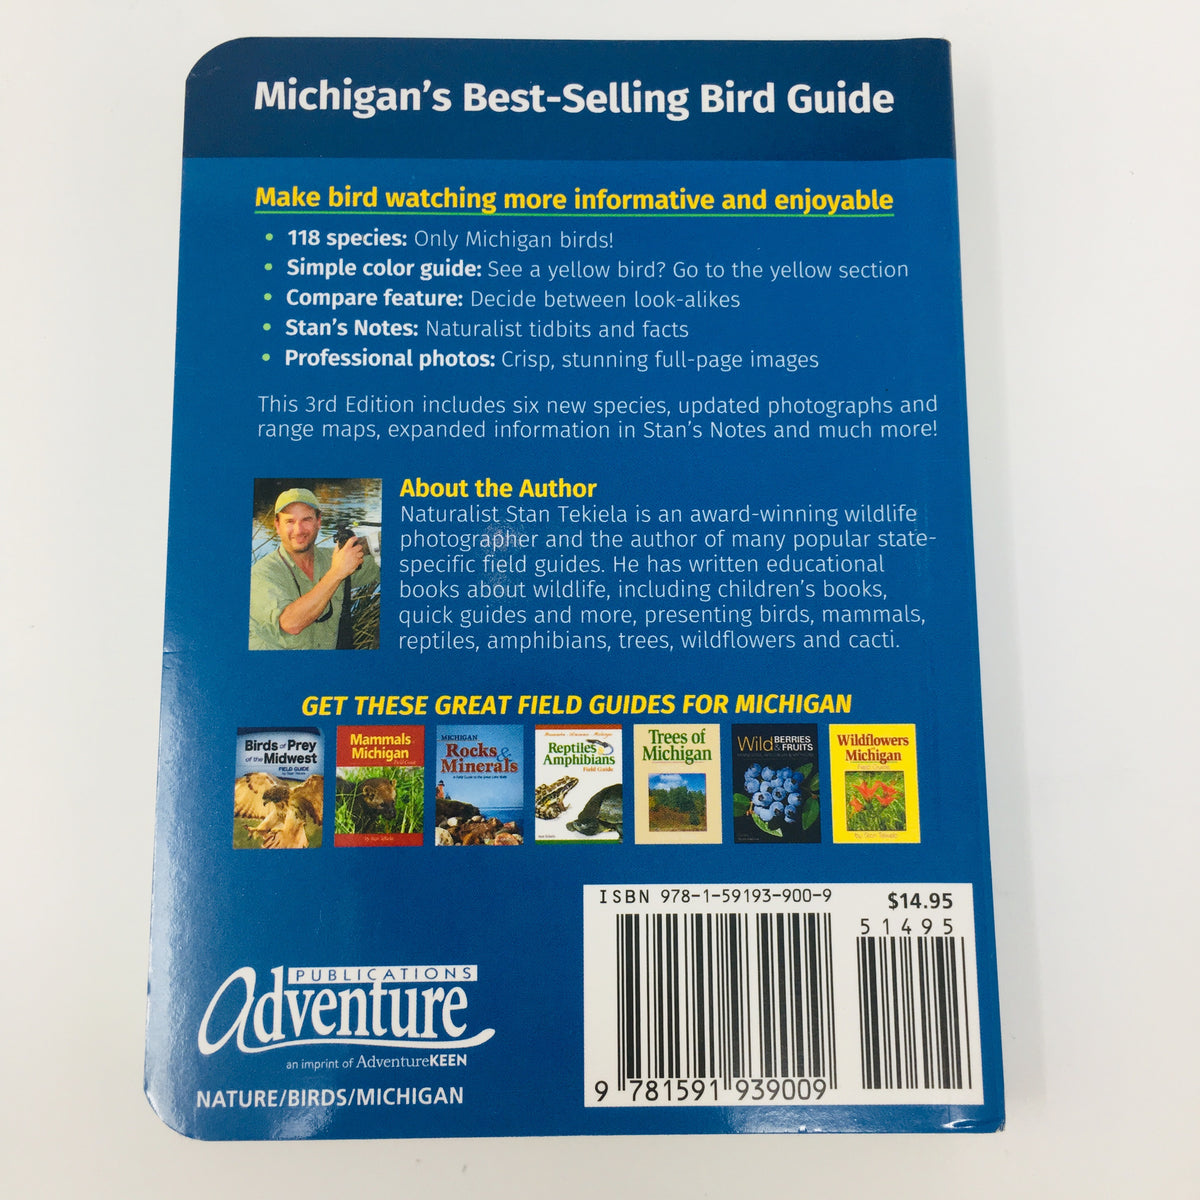 Birds Of Michigan Field Guide 3rd Edition